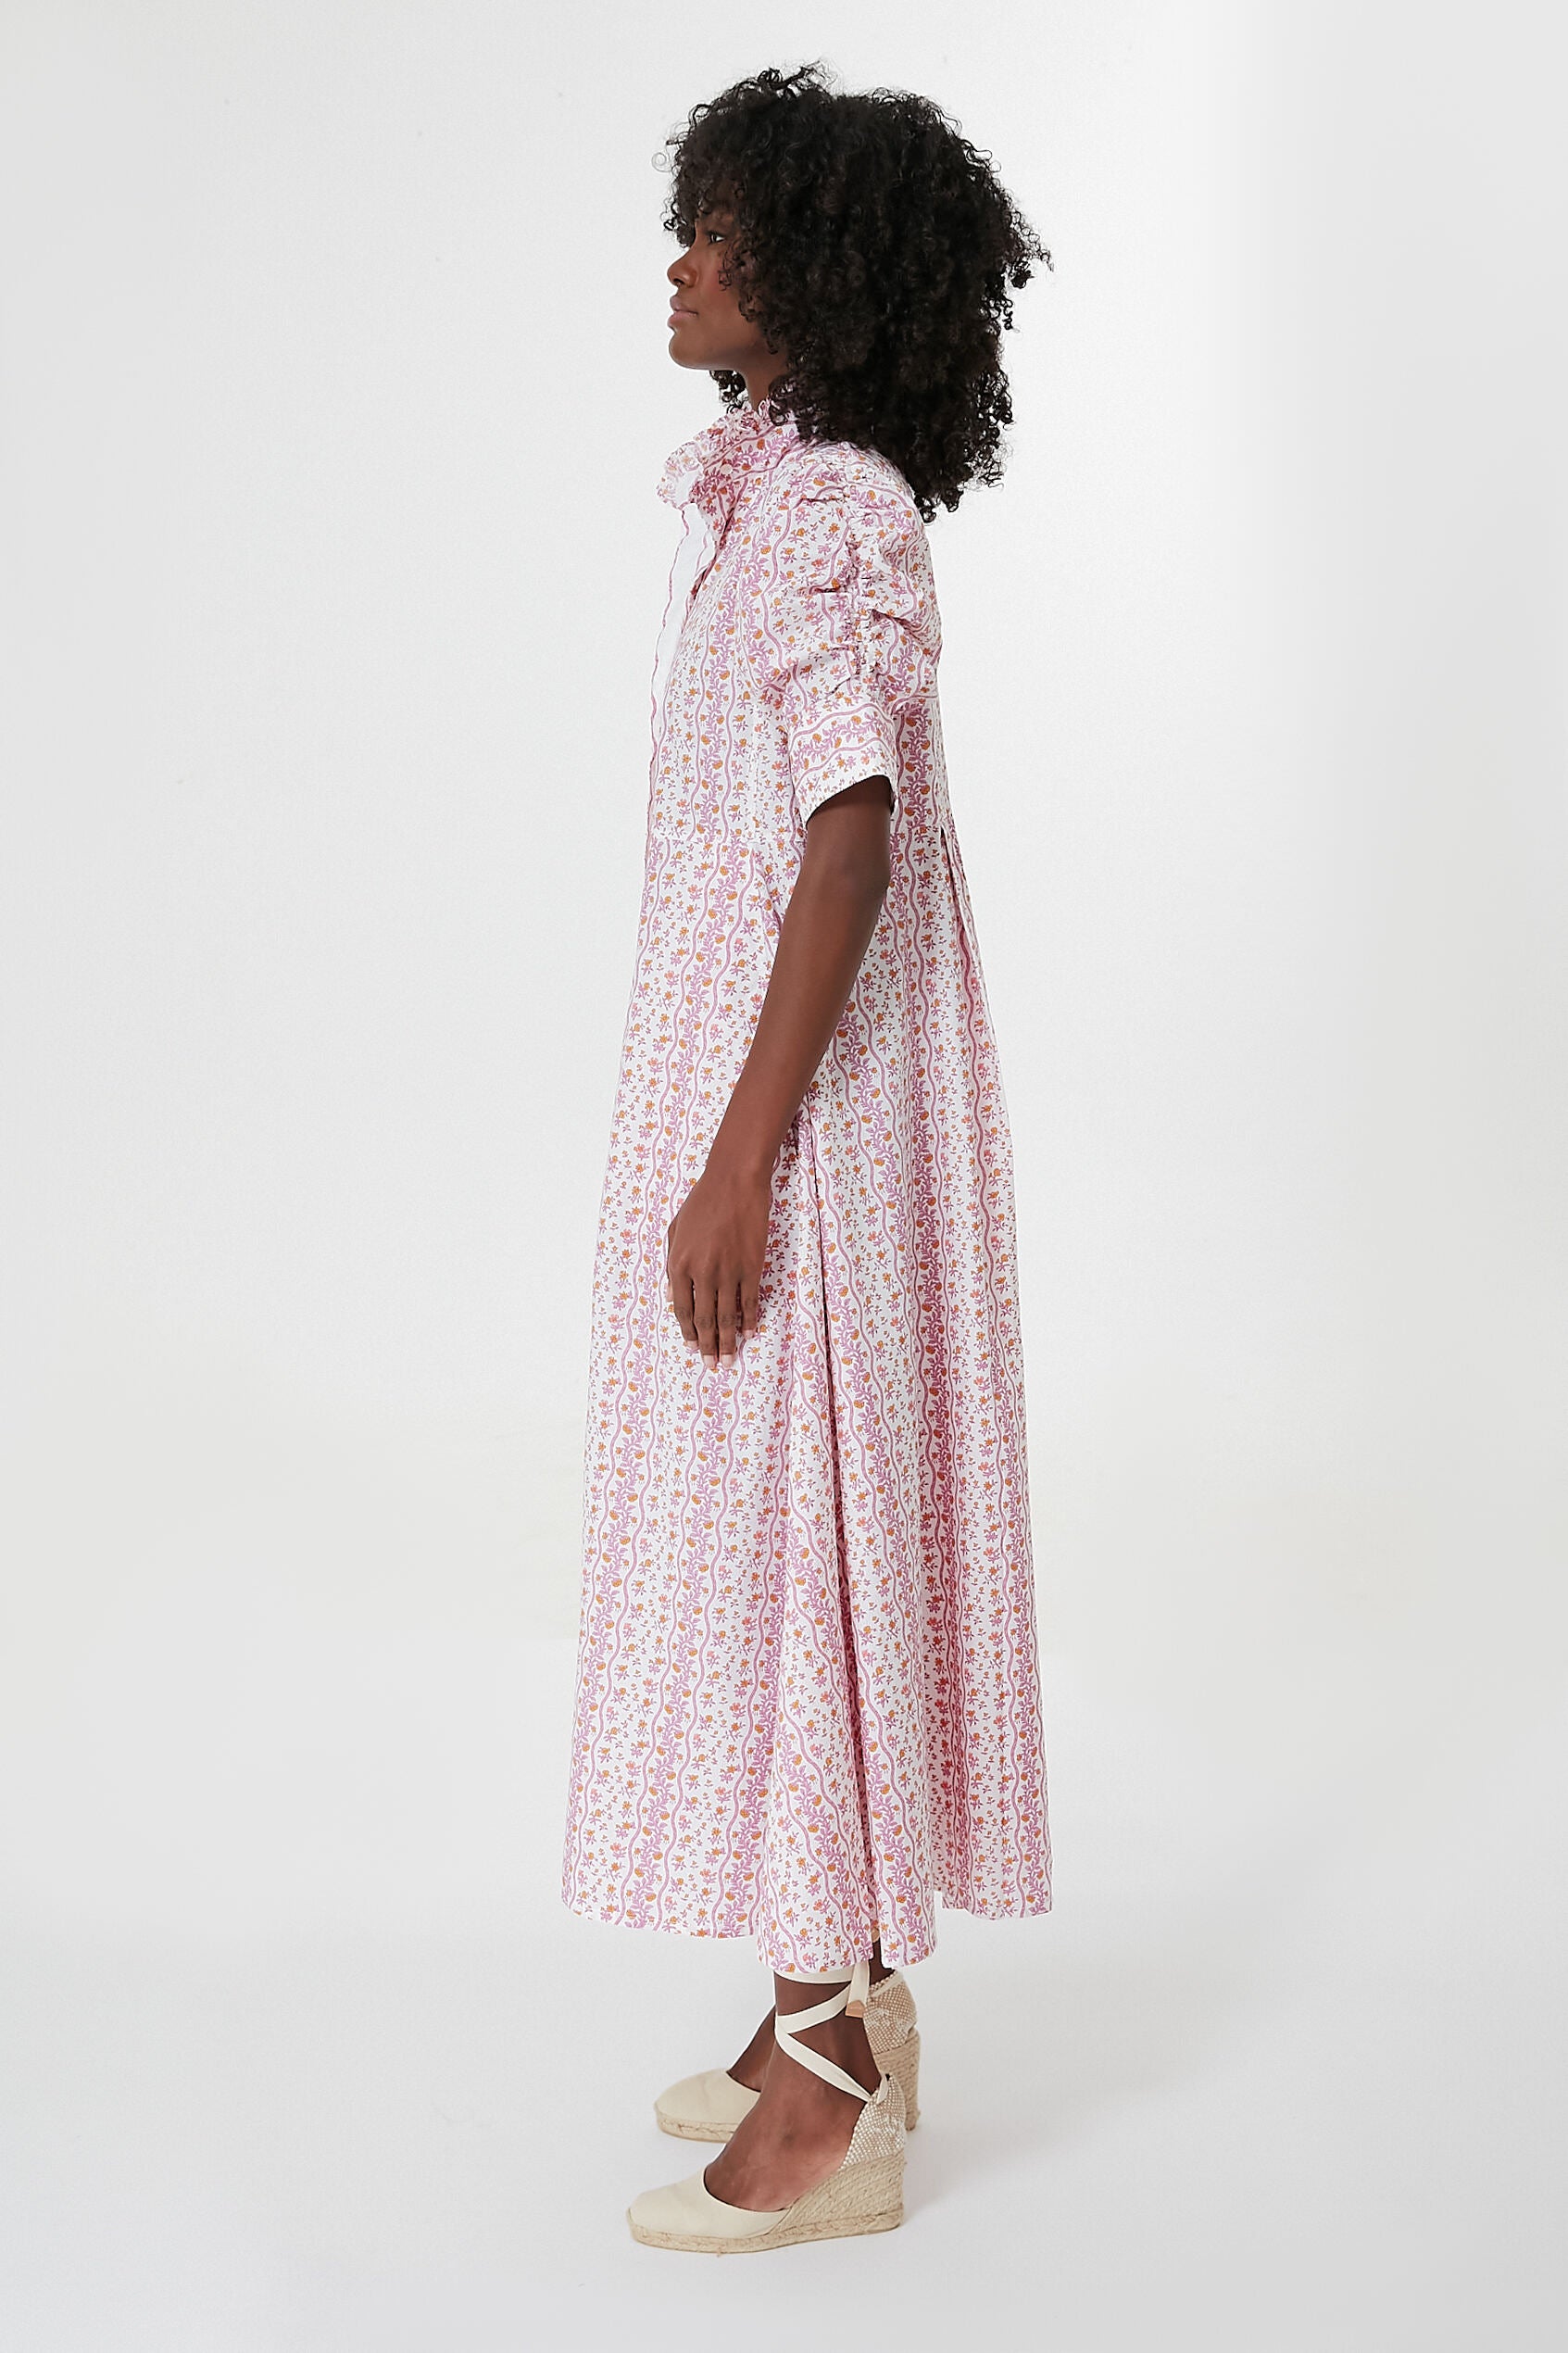 Lauren Conrad Totes Balenciaga 'City' Handbag in Polka-Dot Shirt Dress